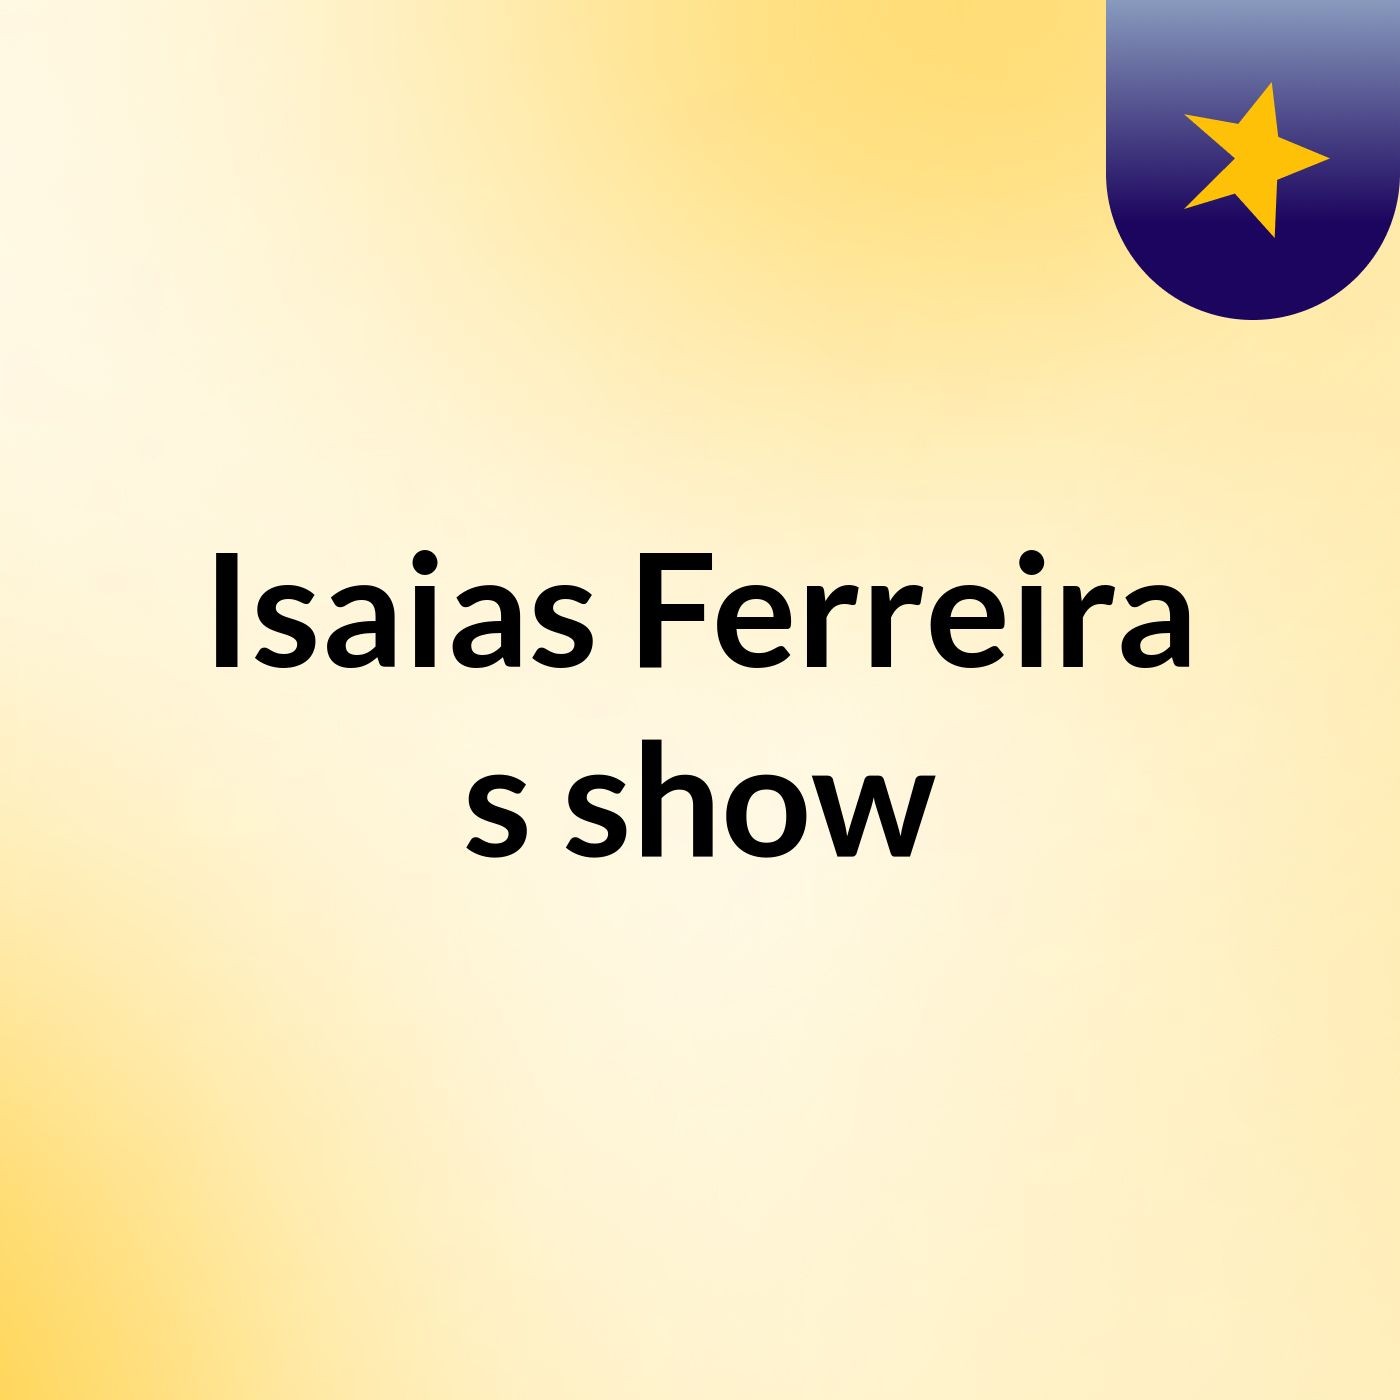 Isaias Ferreira's show